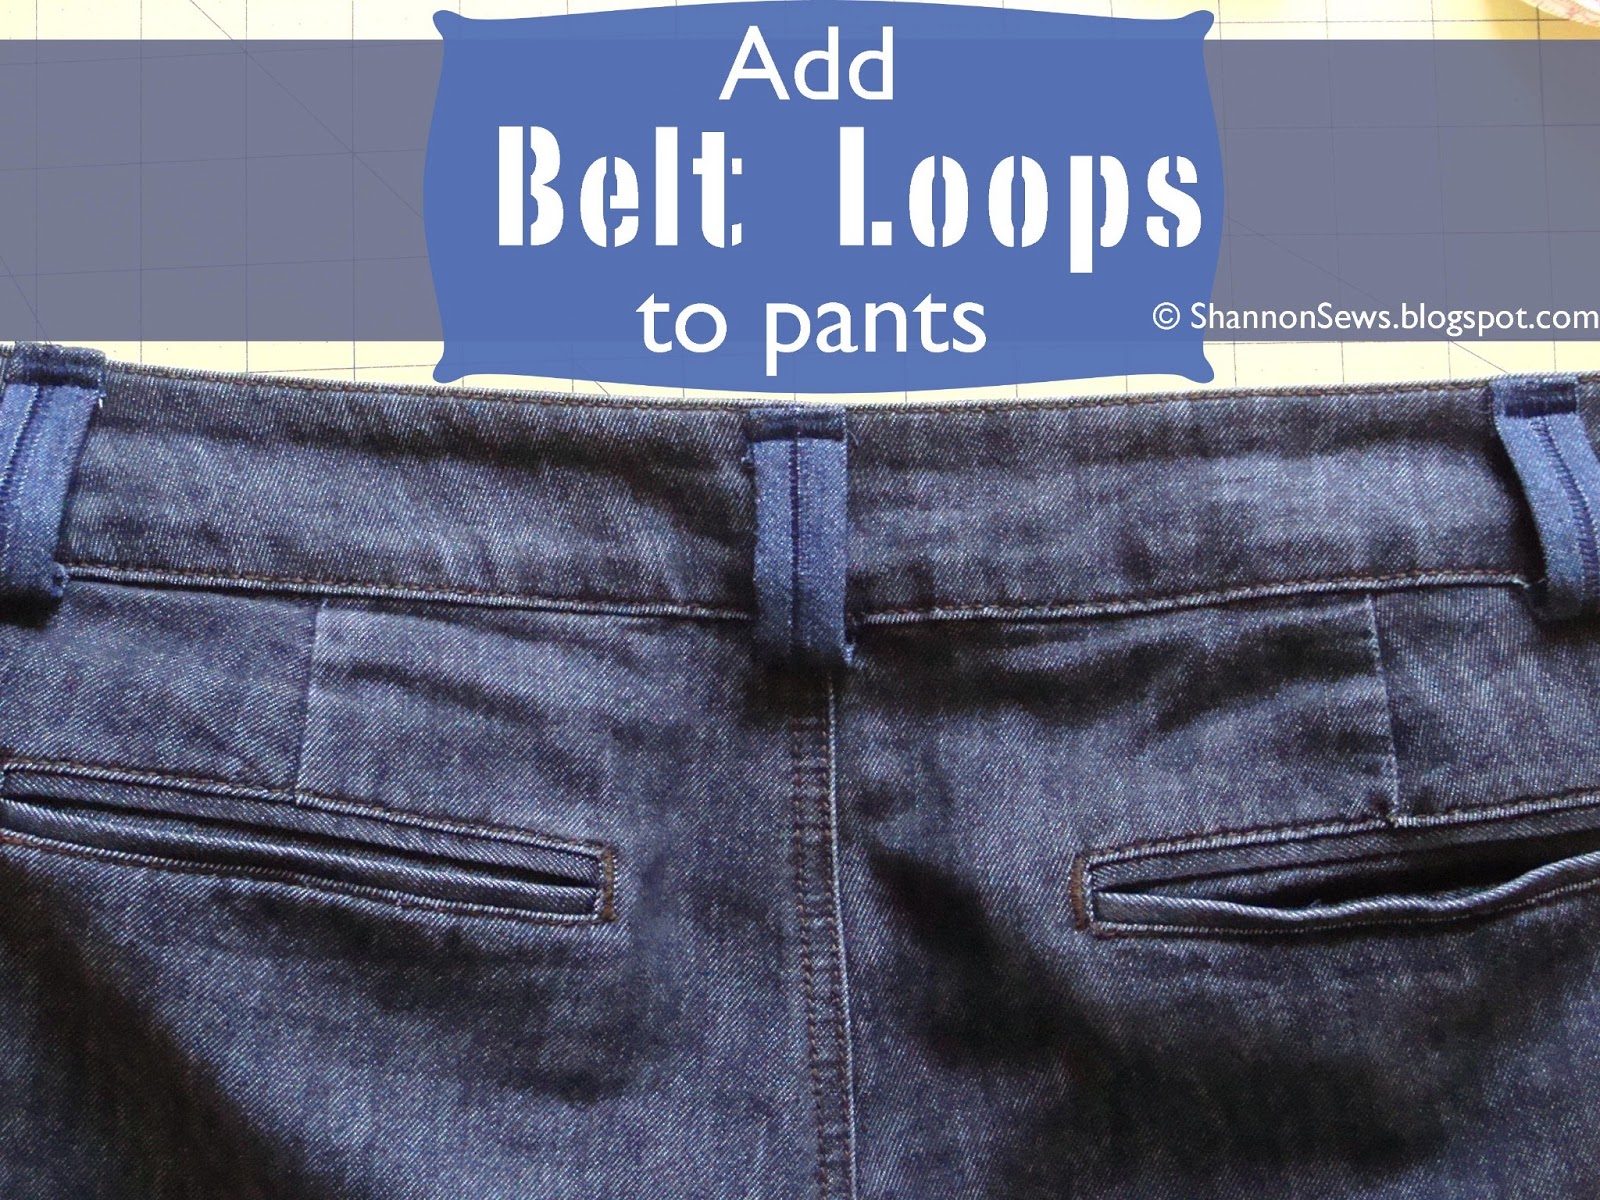 Shannon Sews: Add Belt Loops to Pants Tutorial